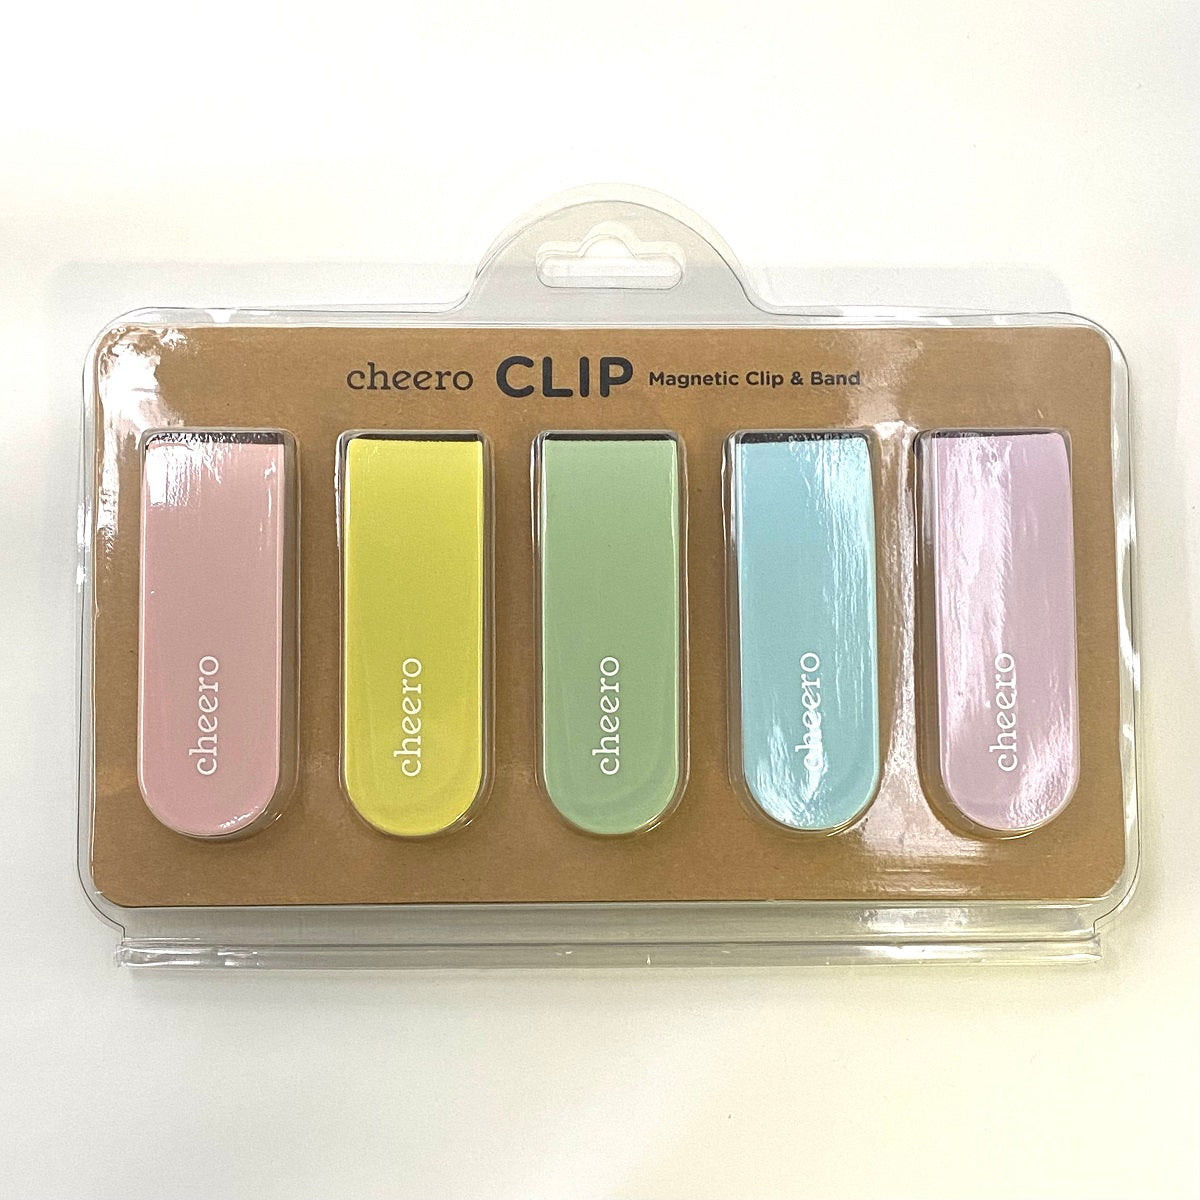 cheero CLIP 万能クリップ (5色セット) パステルカラー